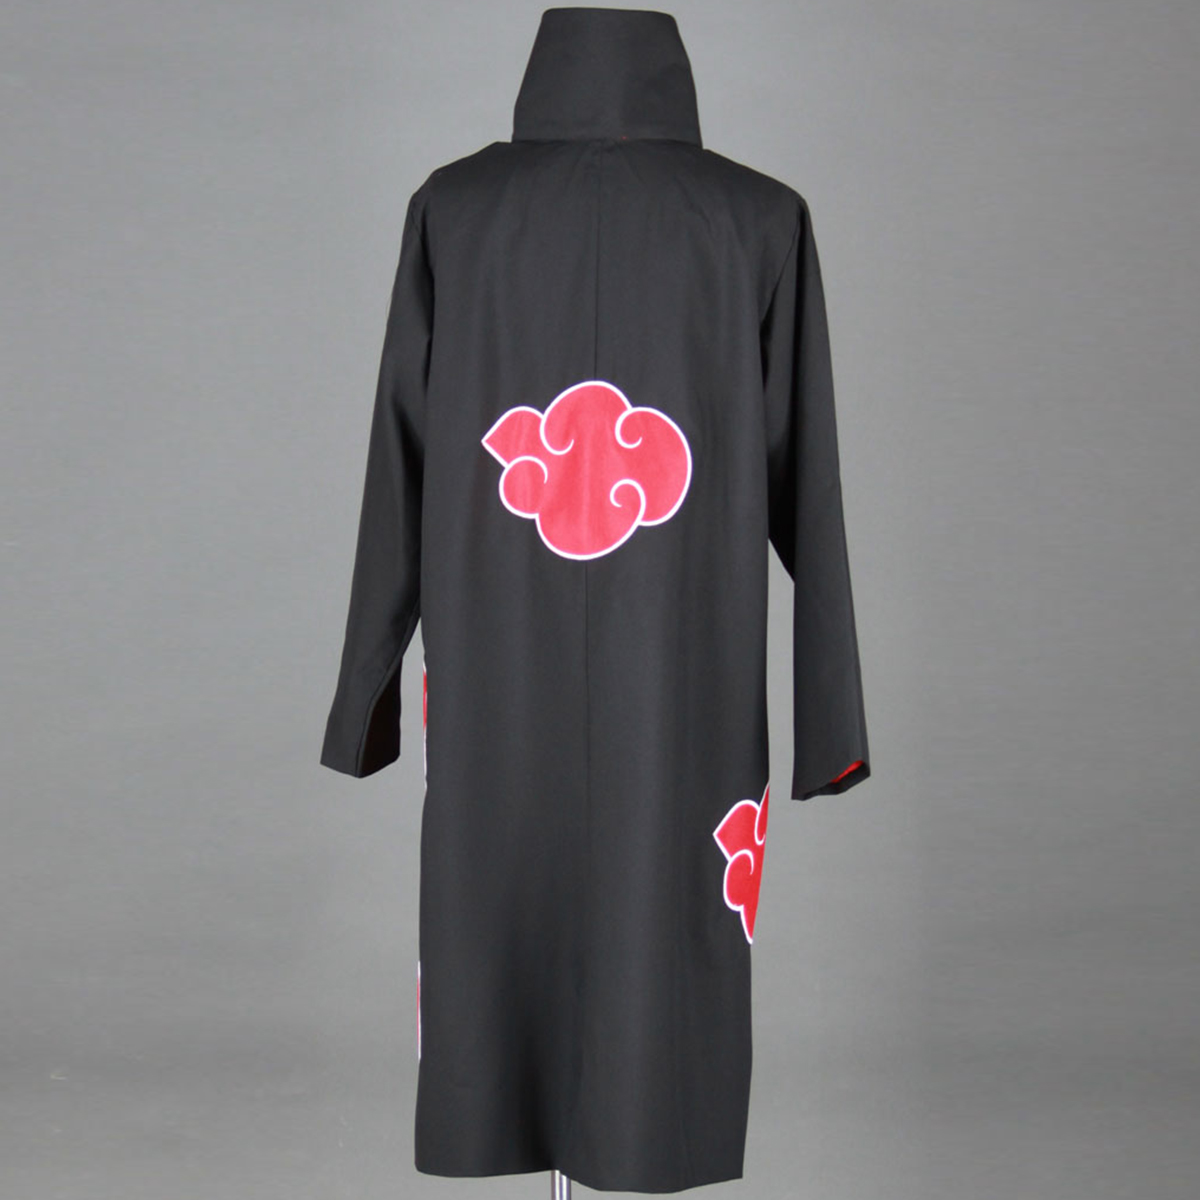 Naruto Akatsuki Organization 3 Anime Cosplay Costumes Outfit